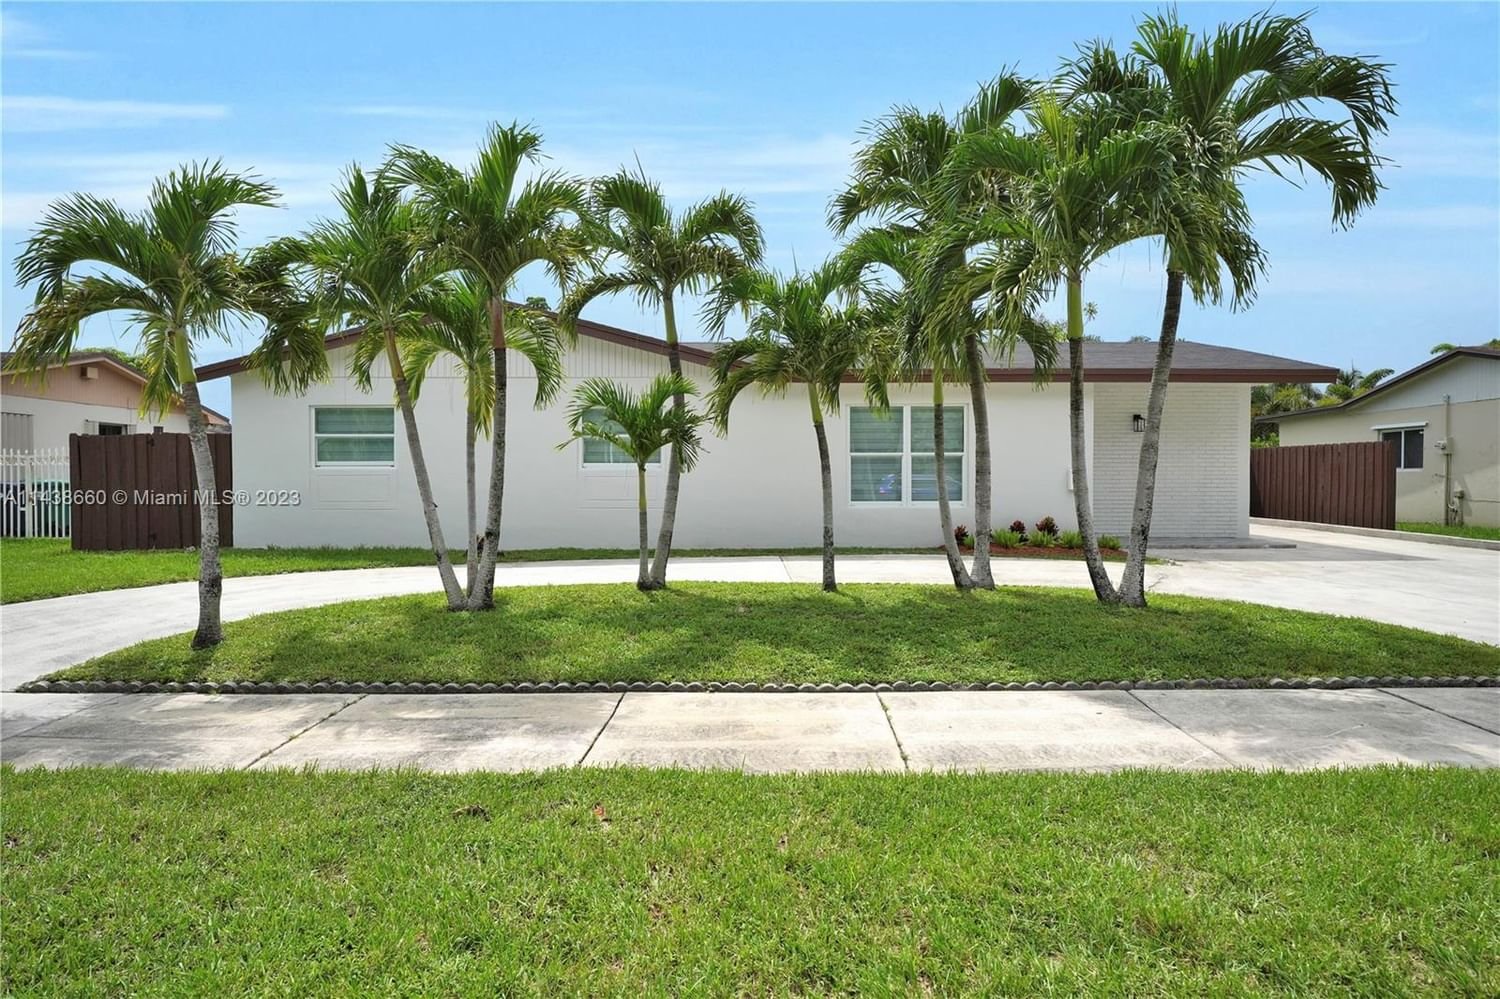 Real estate property located at 5030 127th Pl, Miami-Dade County, Miami, FL